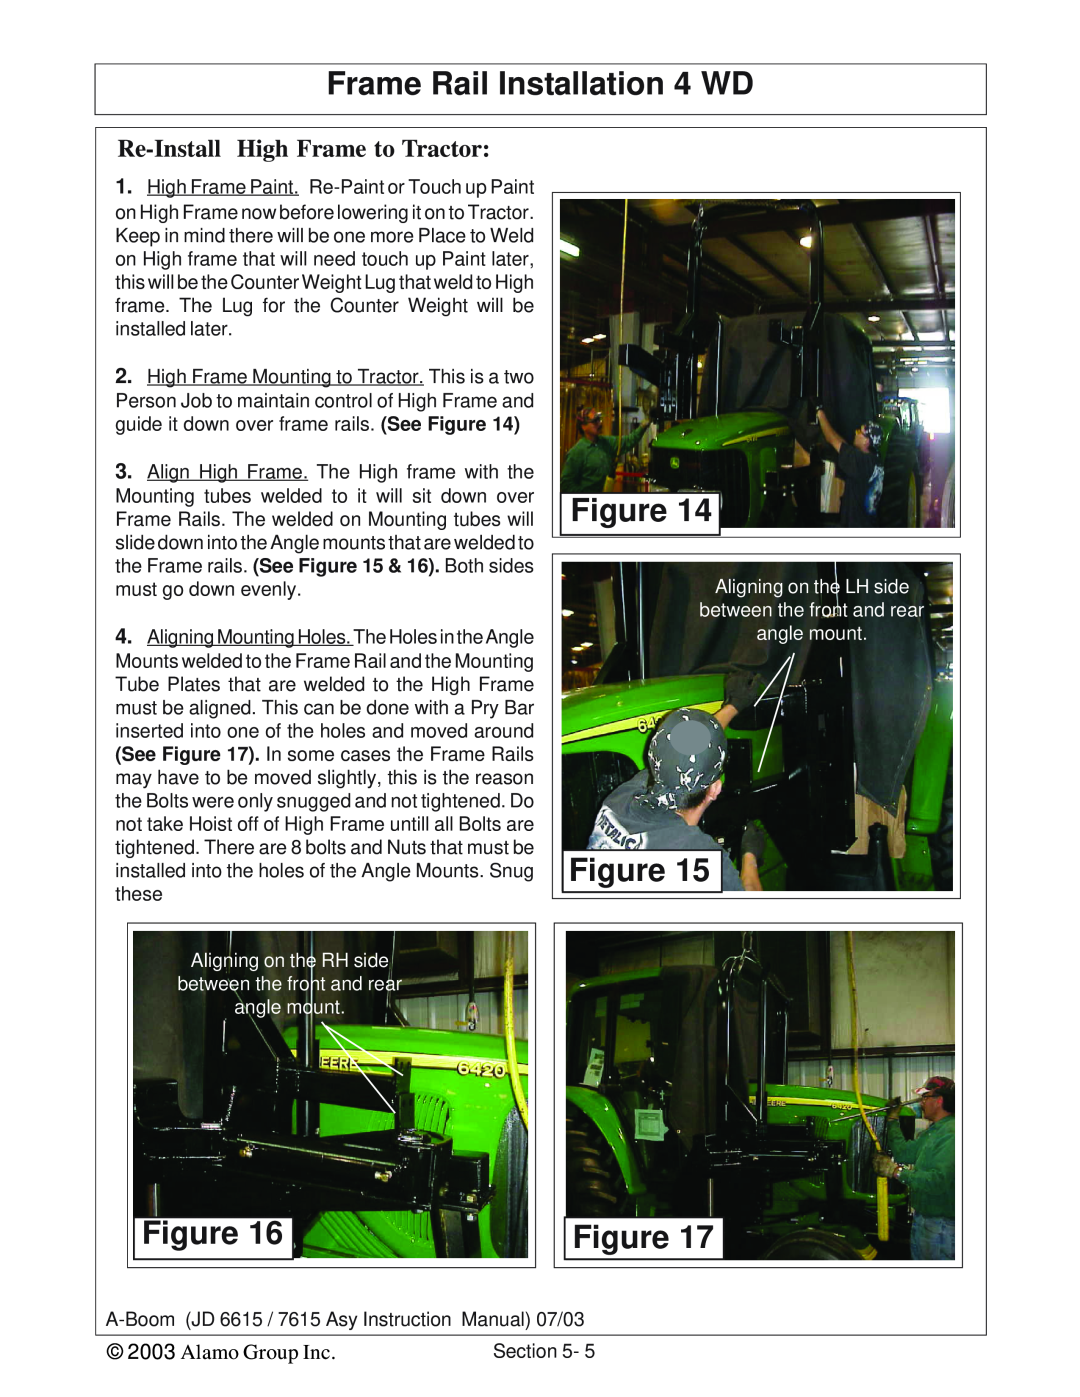 Alamo DSEB-D16/SAS instruction manual Re-Install High Frame to Tractor, Frame Rail Installation 4 WD, Alamo Group Inc 